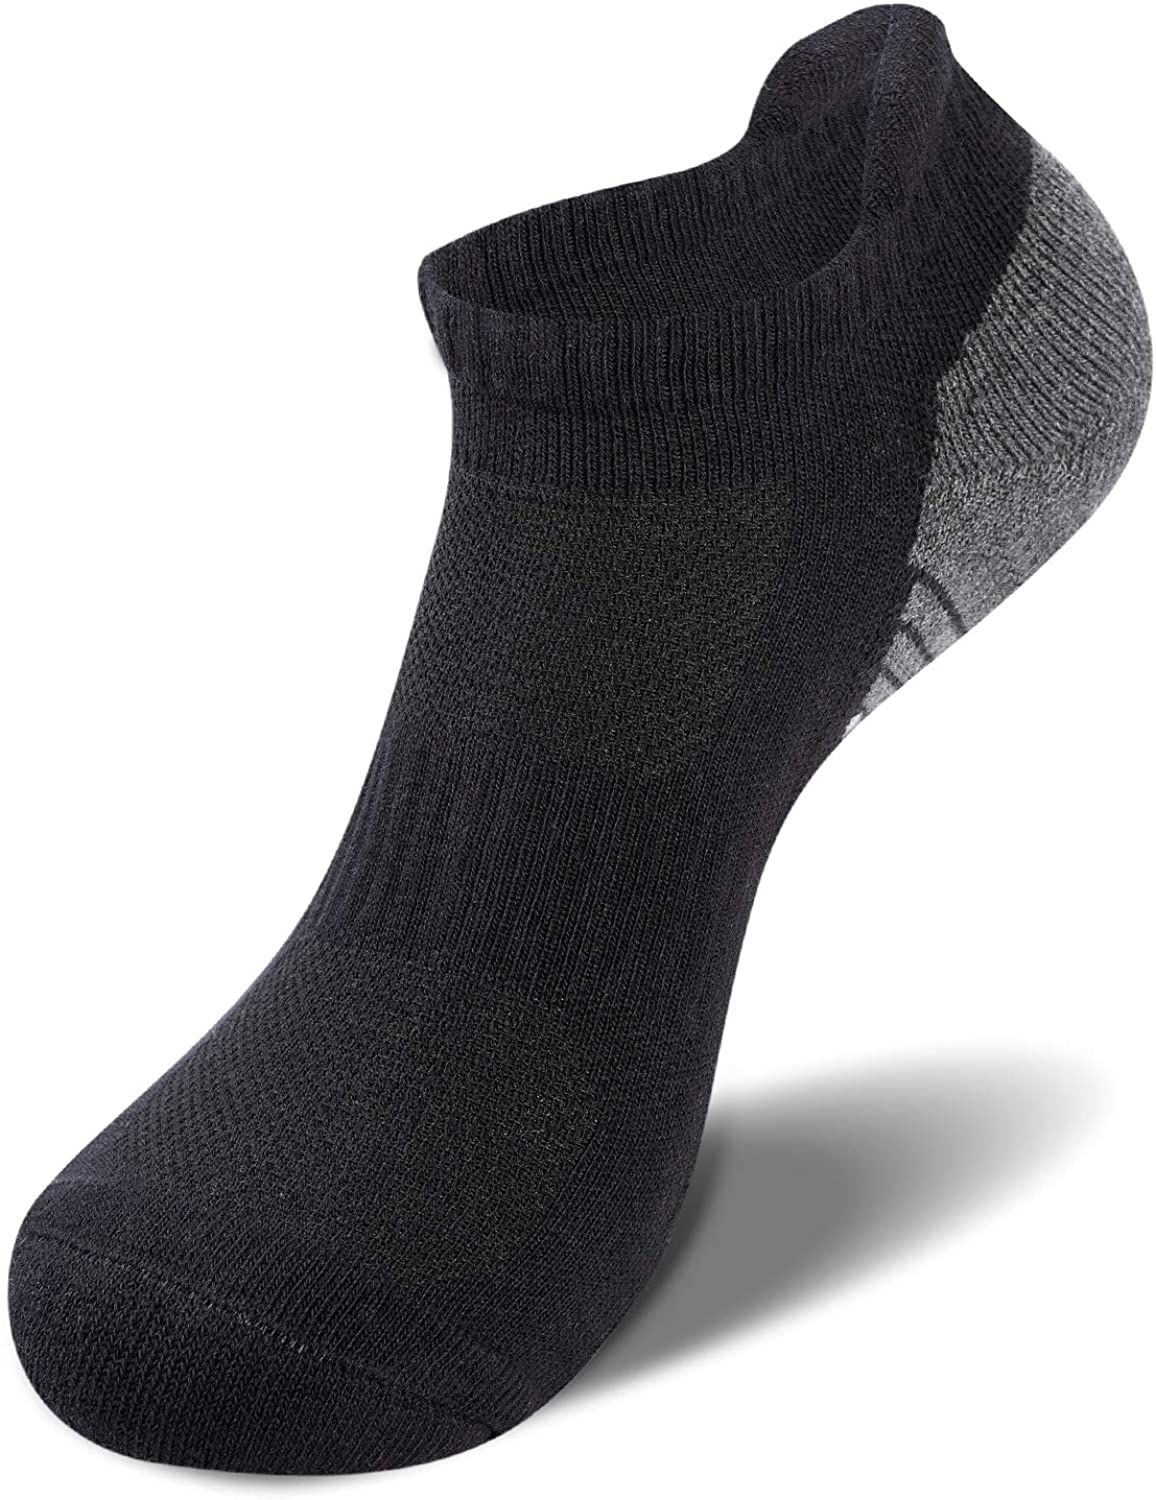 coskefy Running Socks Cushioned Sports Socks Ankle Socks Trainer Socks for Men Women Ladies Cotton Low Cut Athletic Socks (6 Pairs)